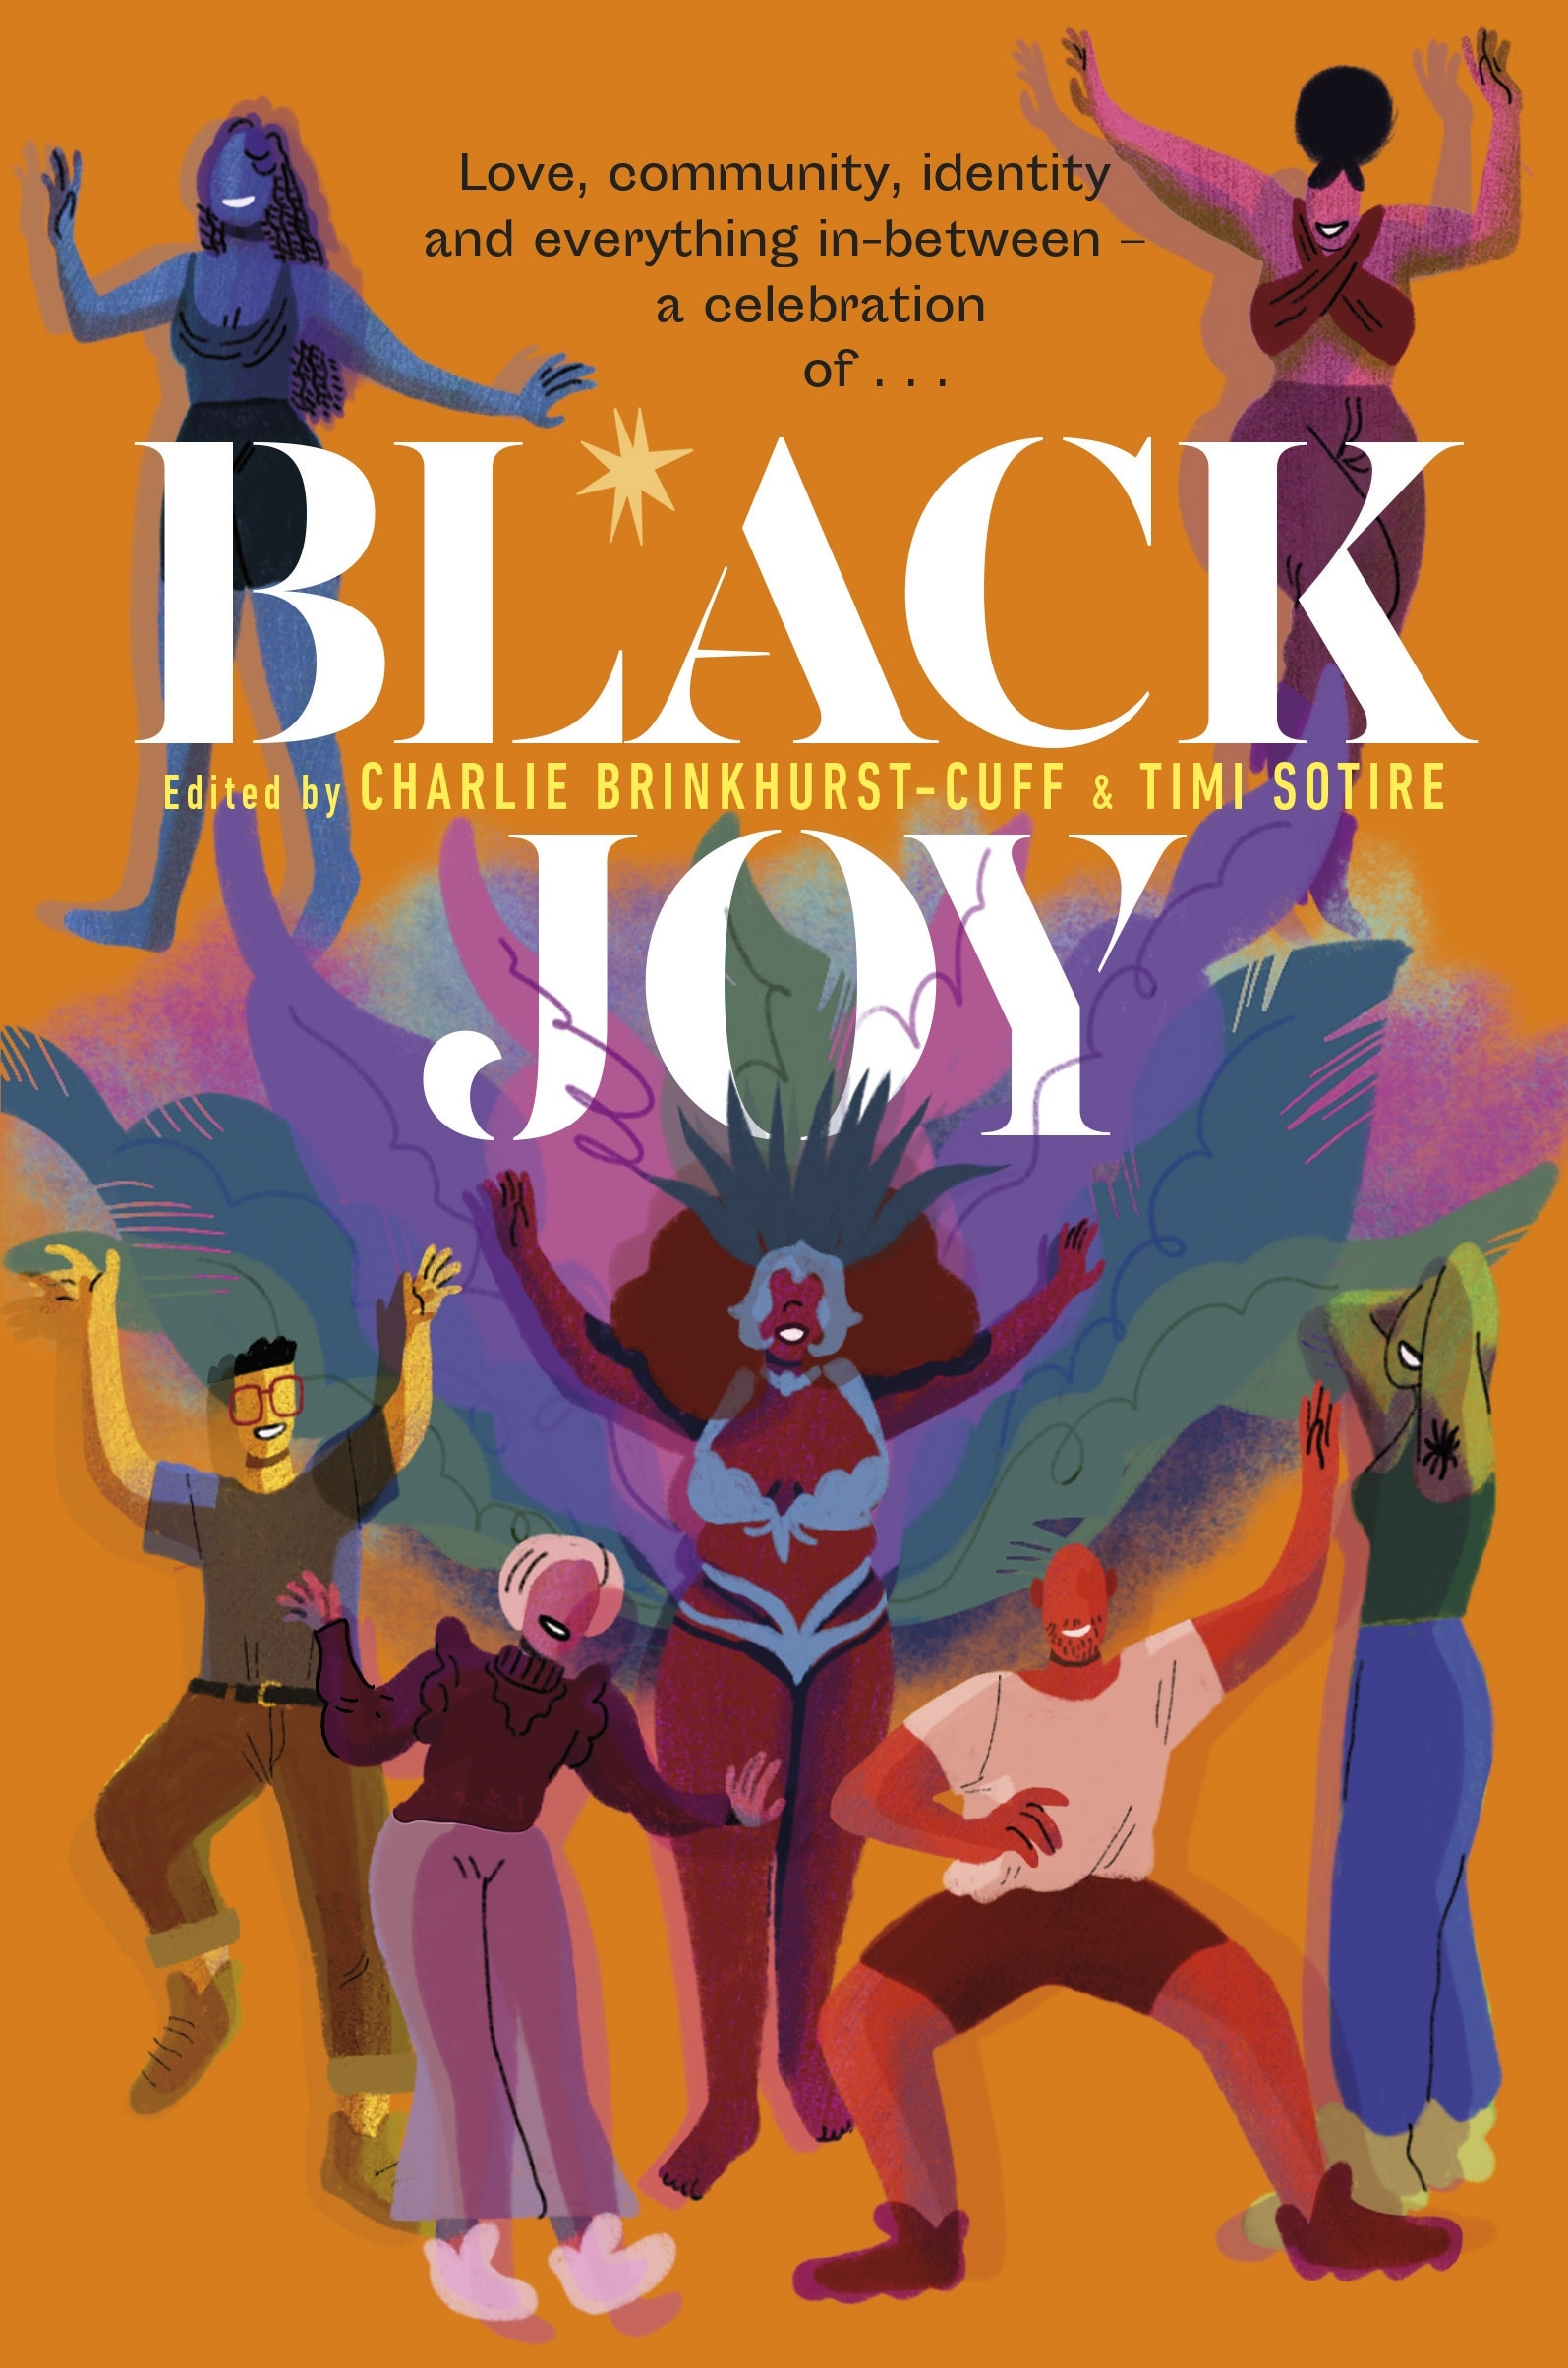 Book “Black Joy” by Various — September 2, 2021